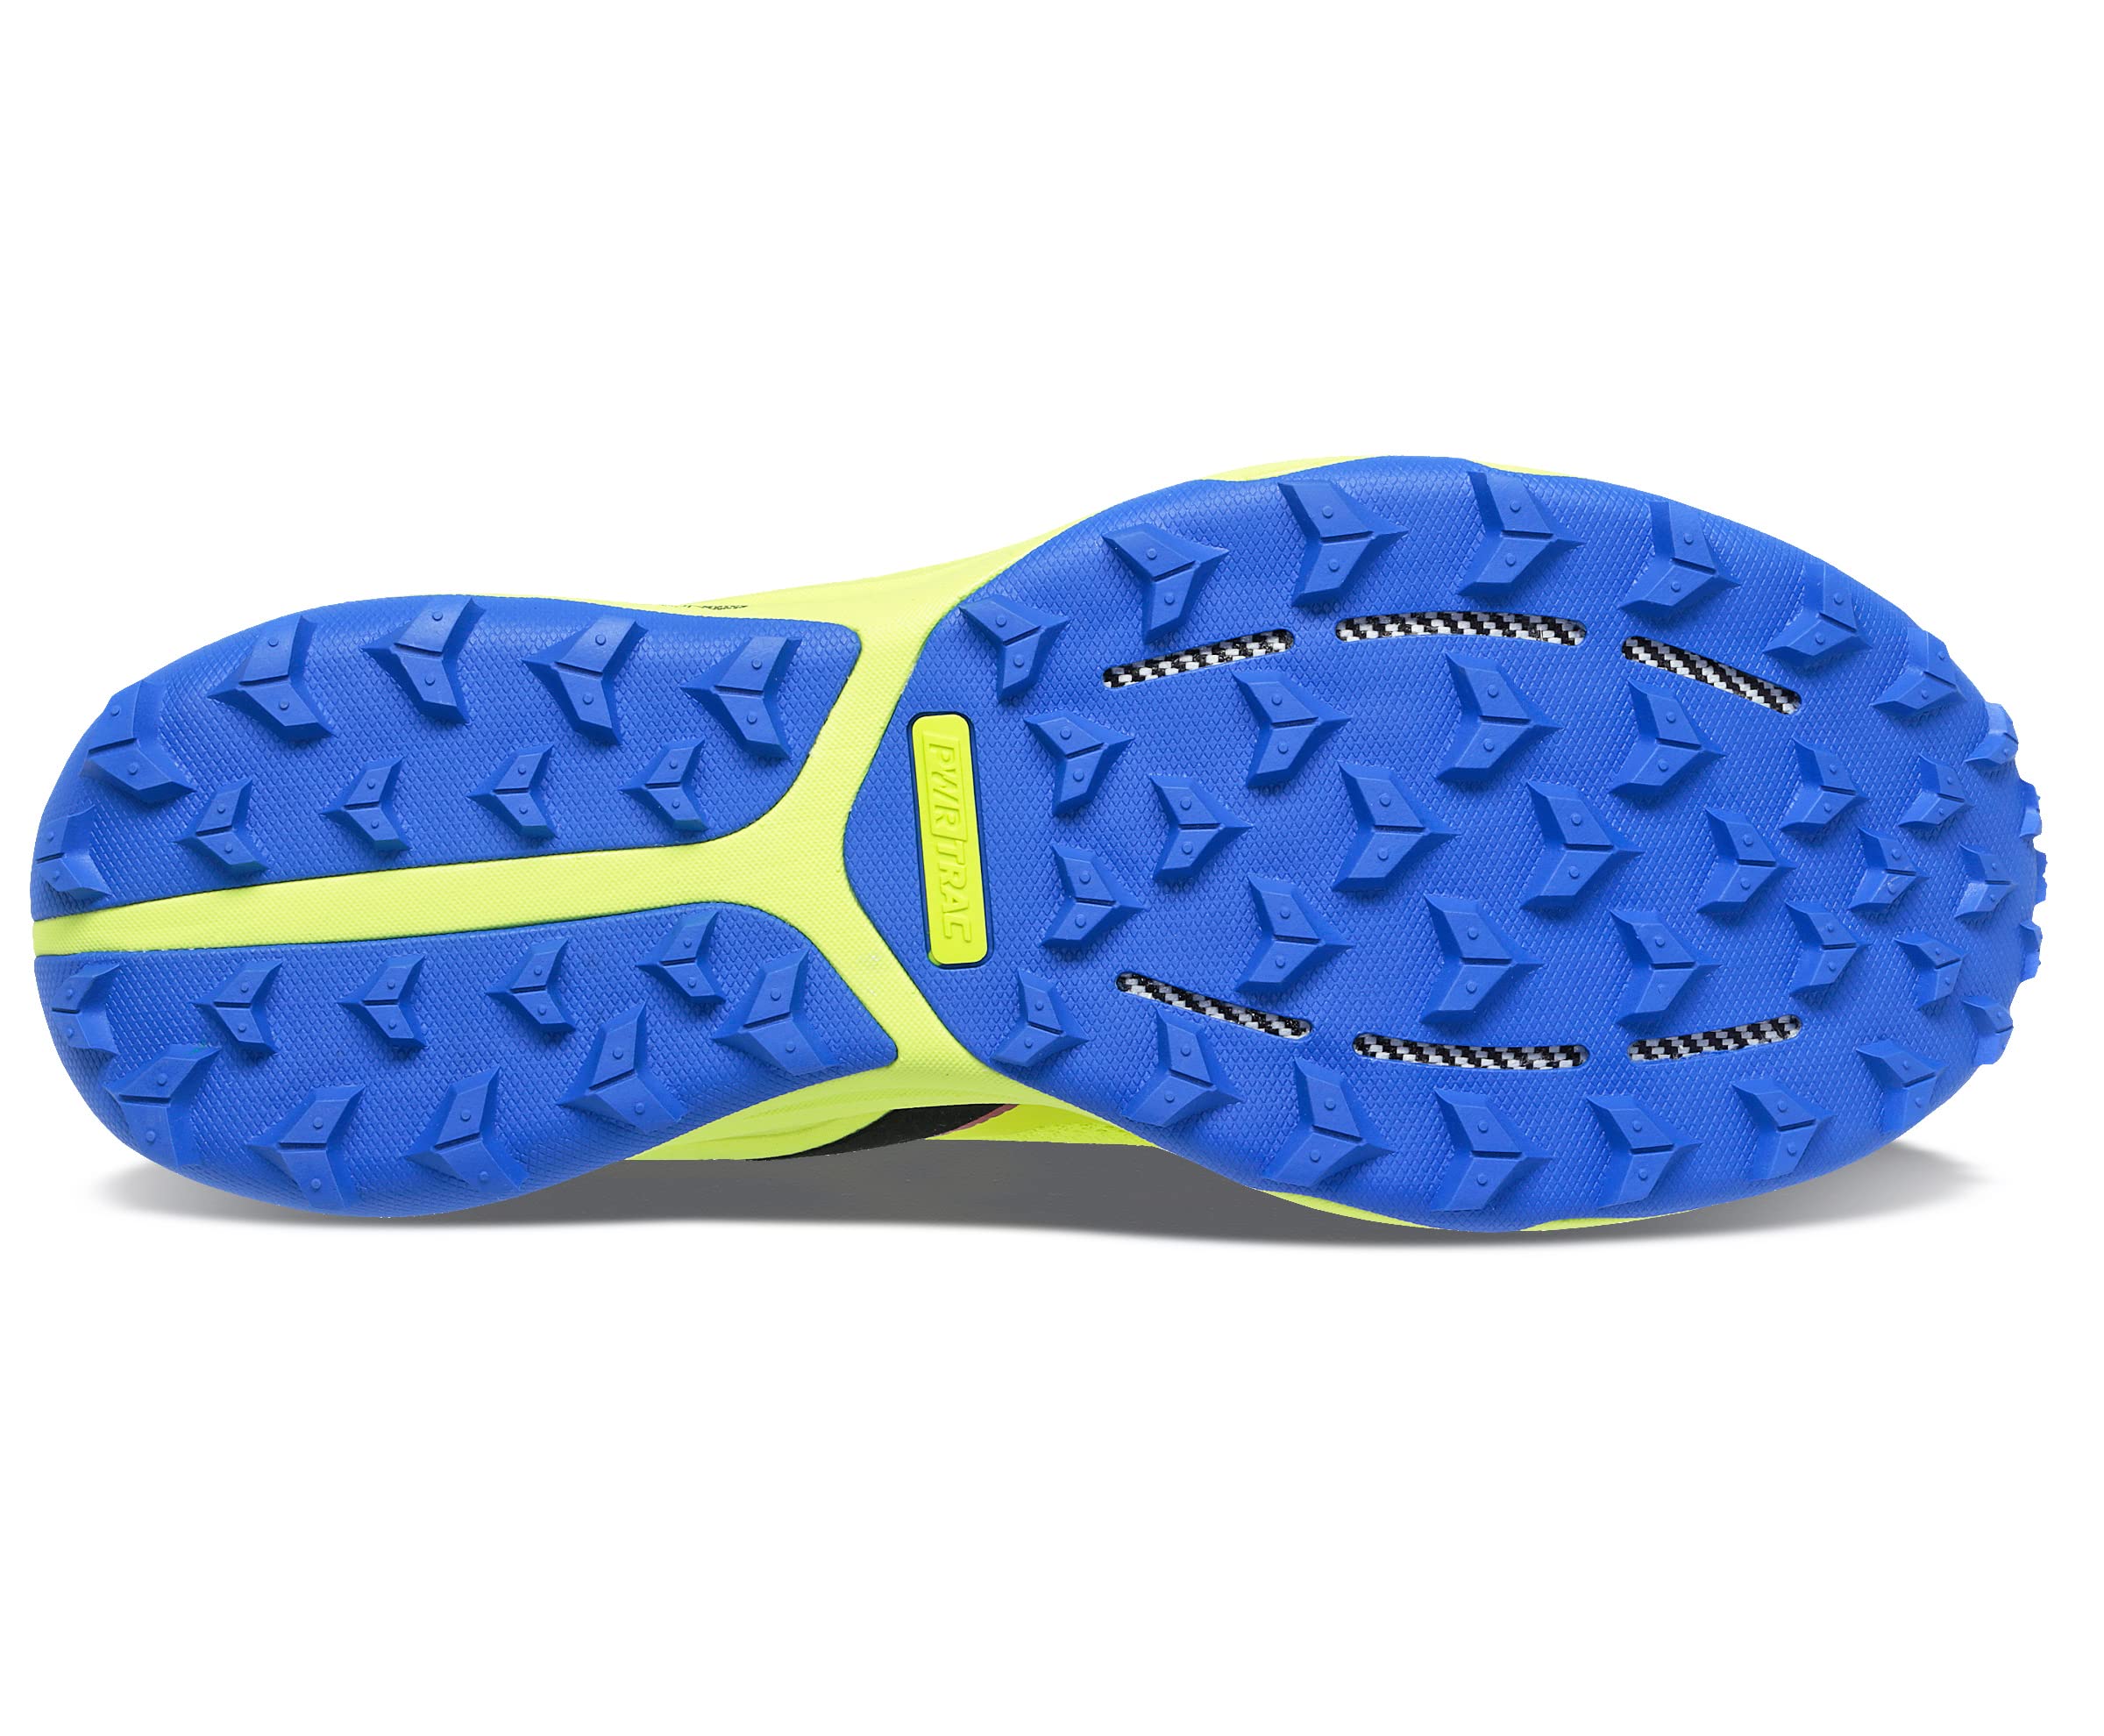 Saucony Men's Xodus Ultra Trail Running Shoe, Acid/Blue RAZ, 9